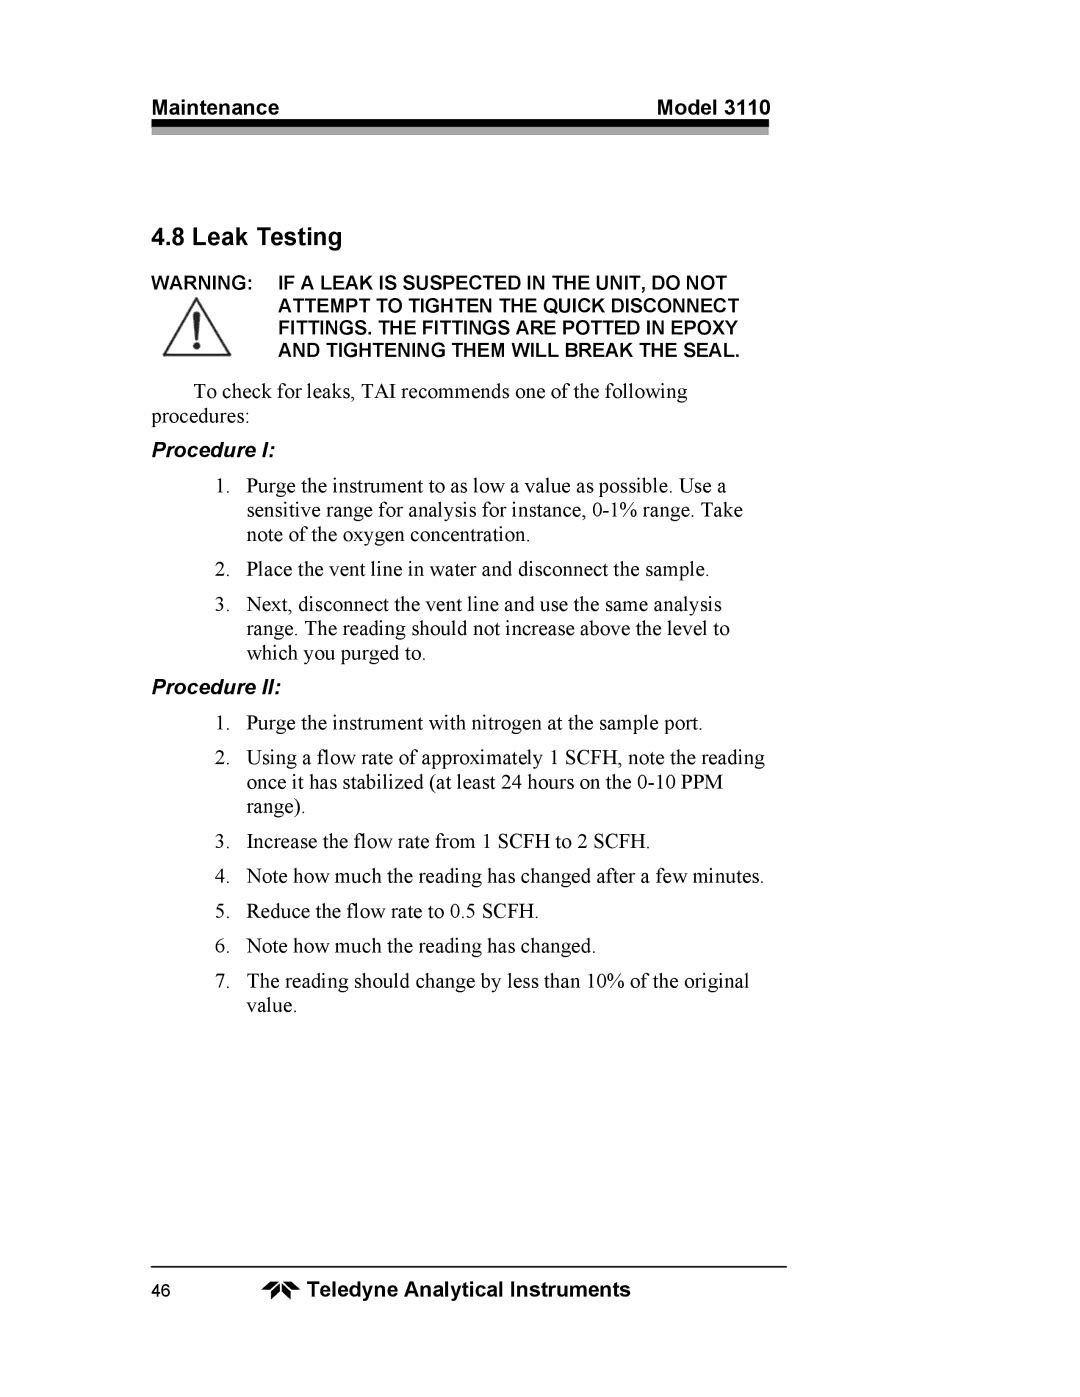 Teledyne 3110 operating instructions Leak Testing, Procedure 